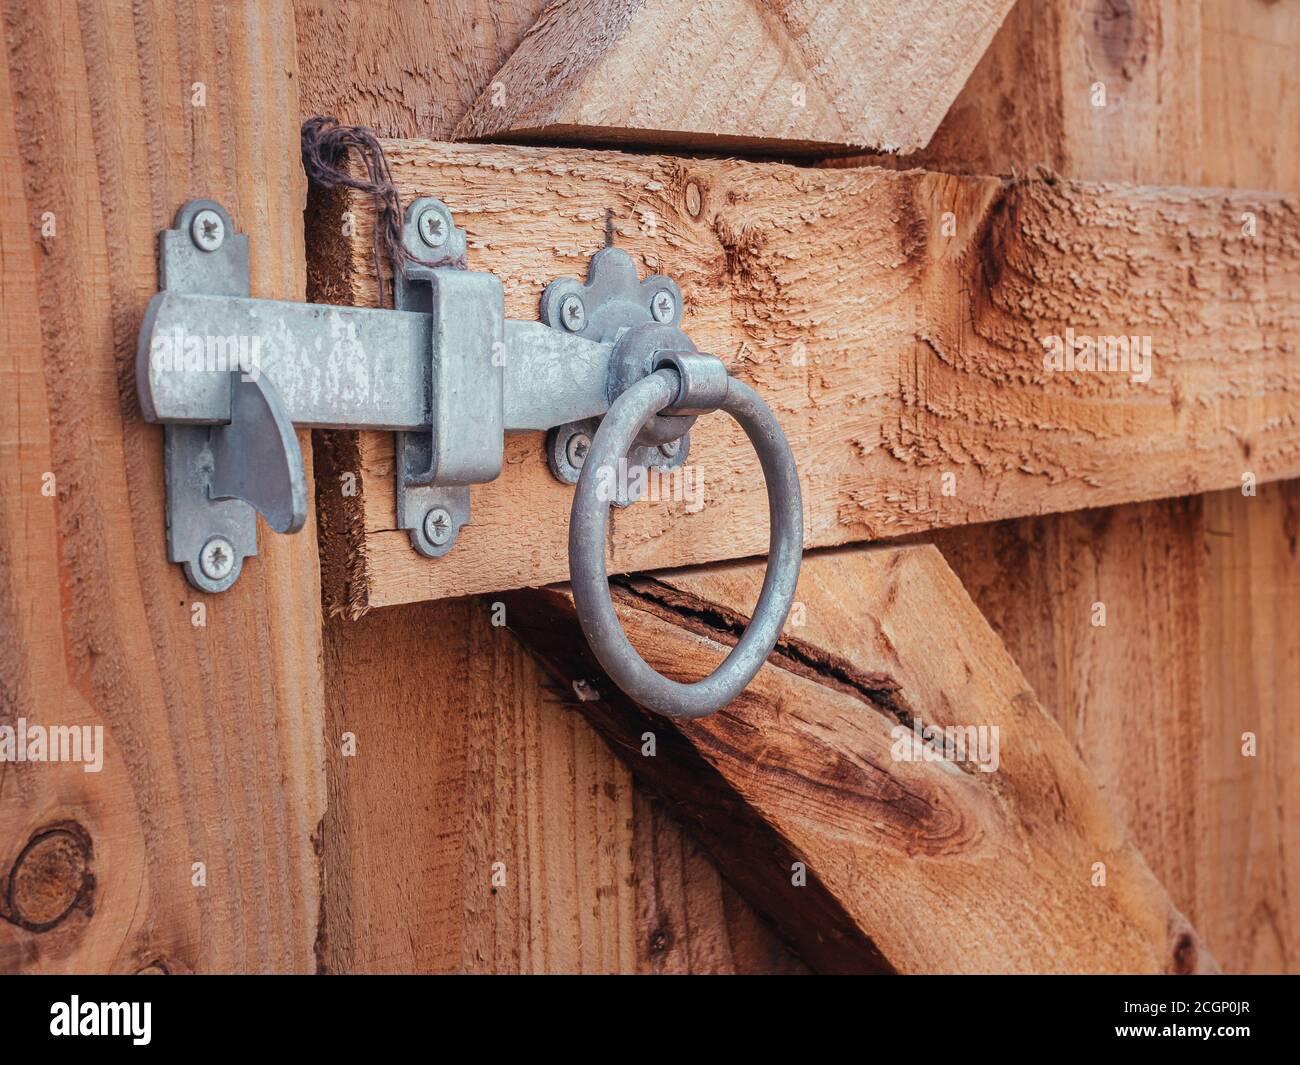 A silver bolt securing a wooden gate in a garden Stock Photo